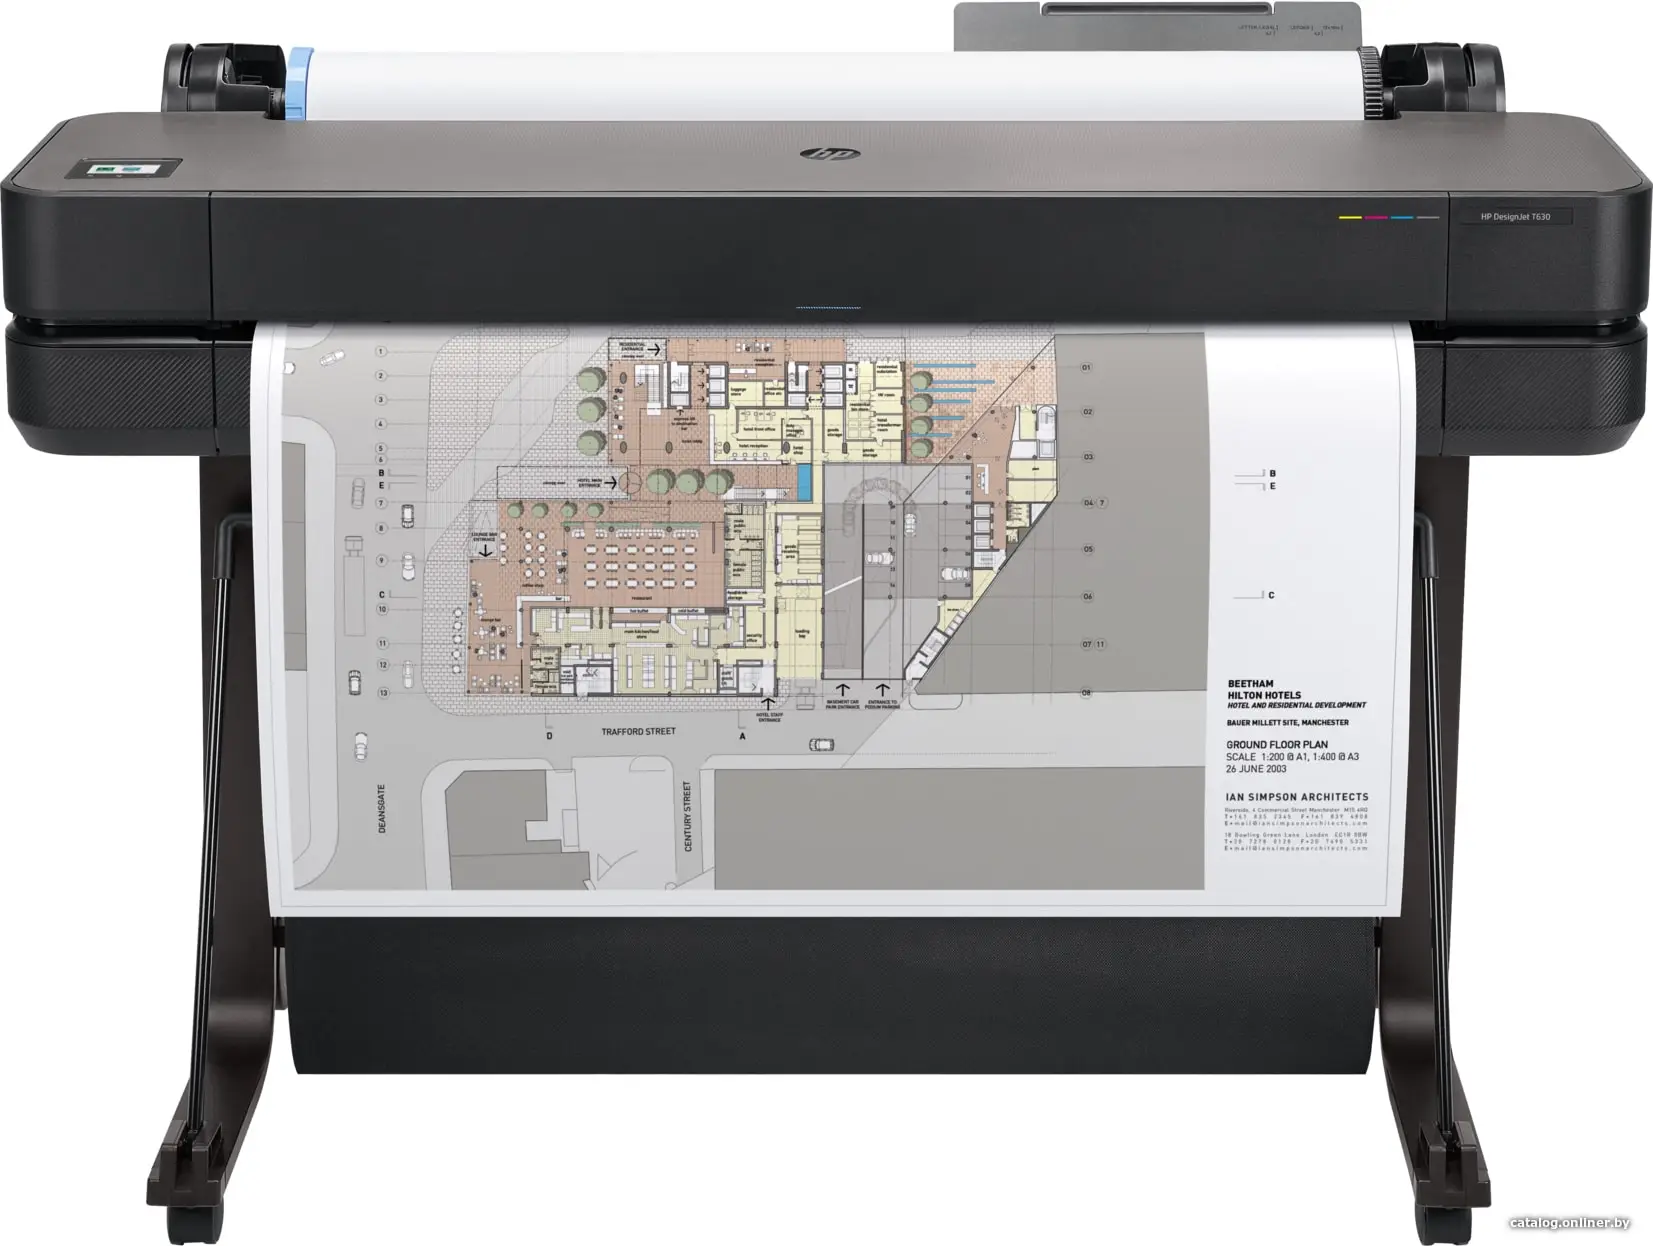 Купить HP DesignJet T630 36-in Printer плоттер, цена, опт и розница